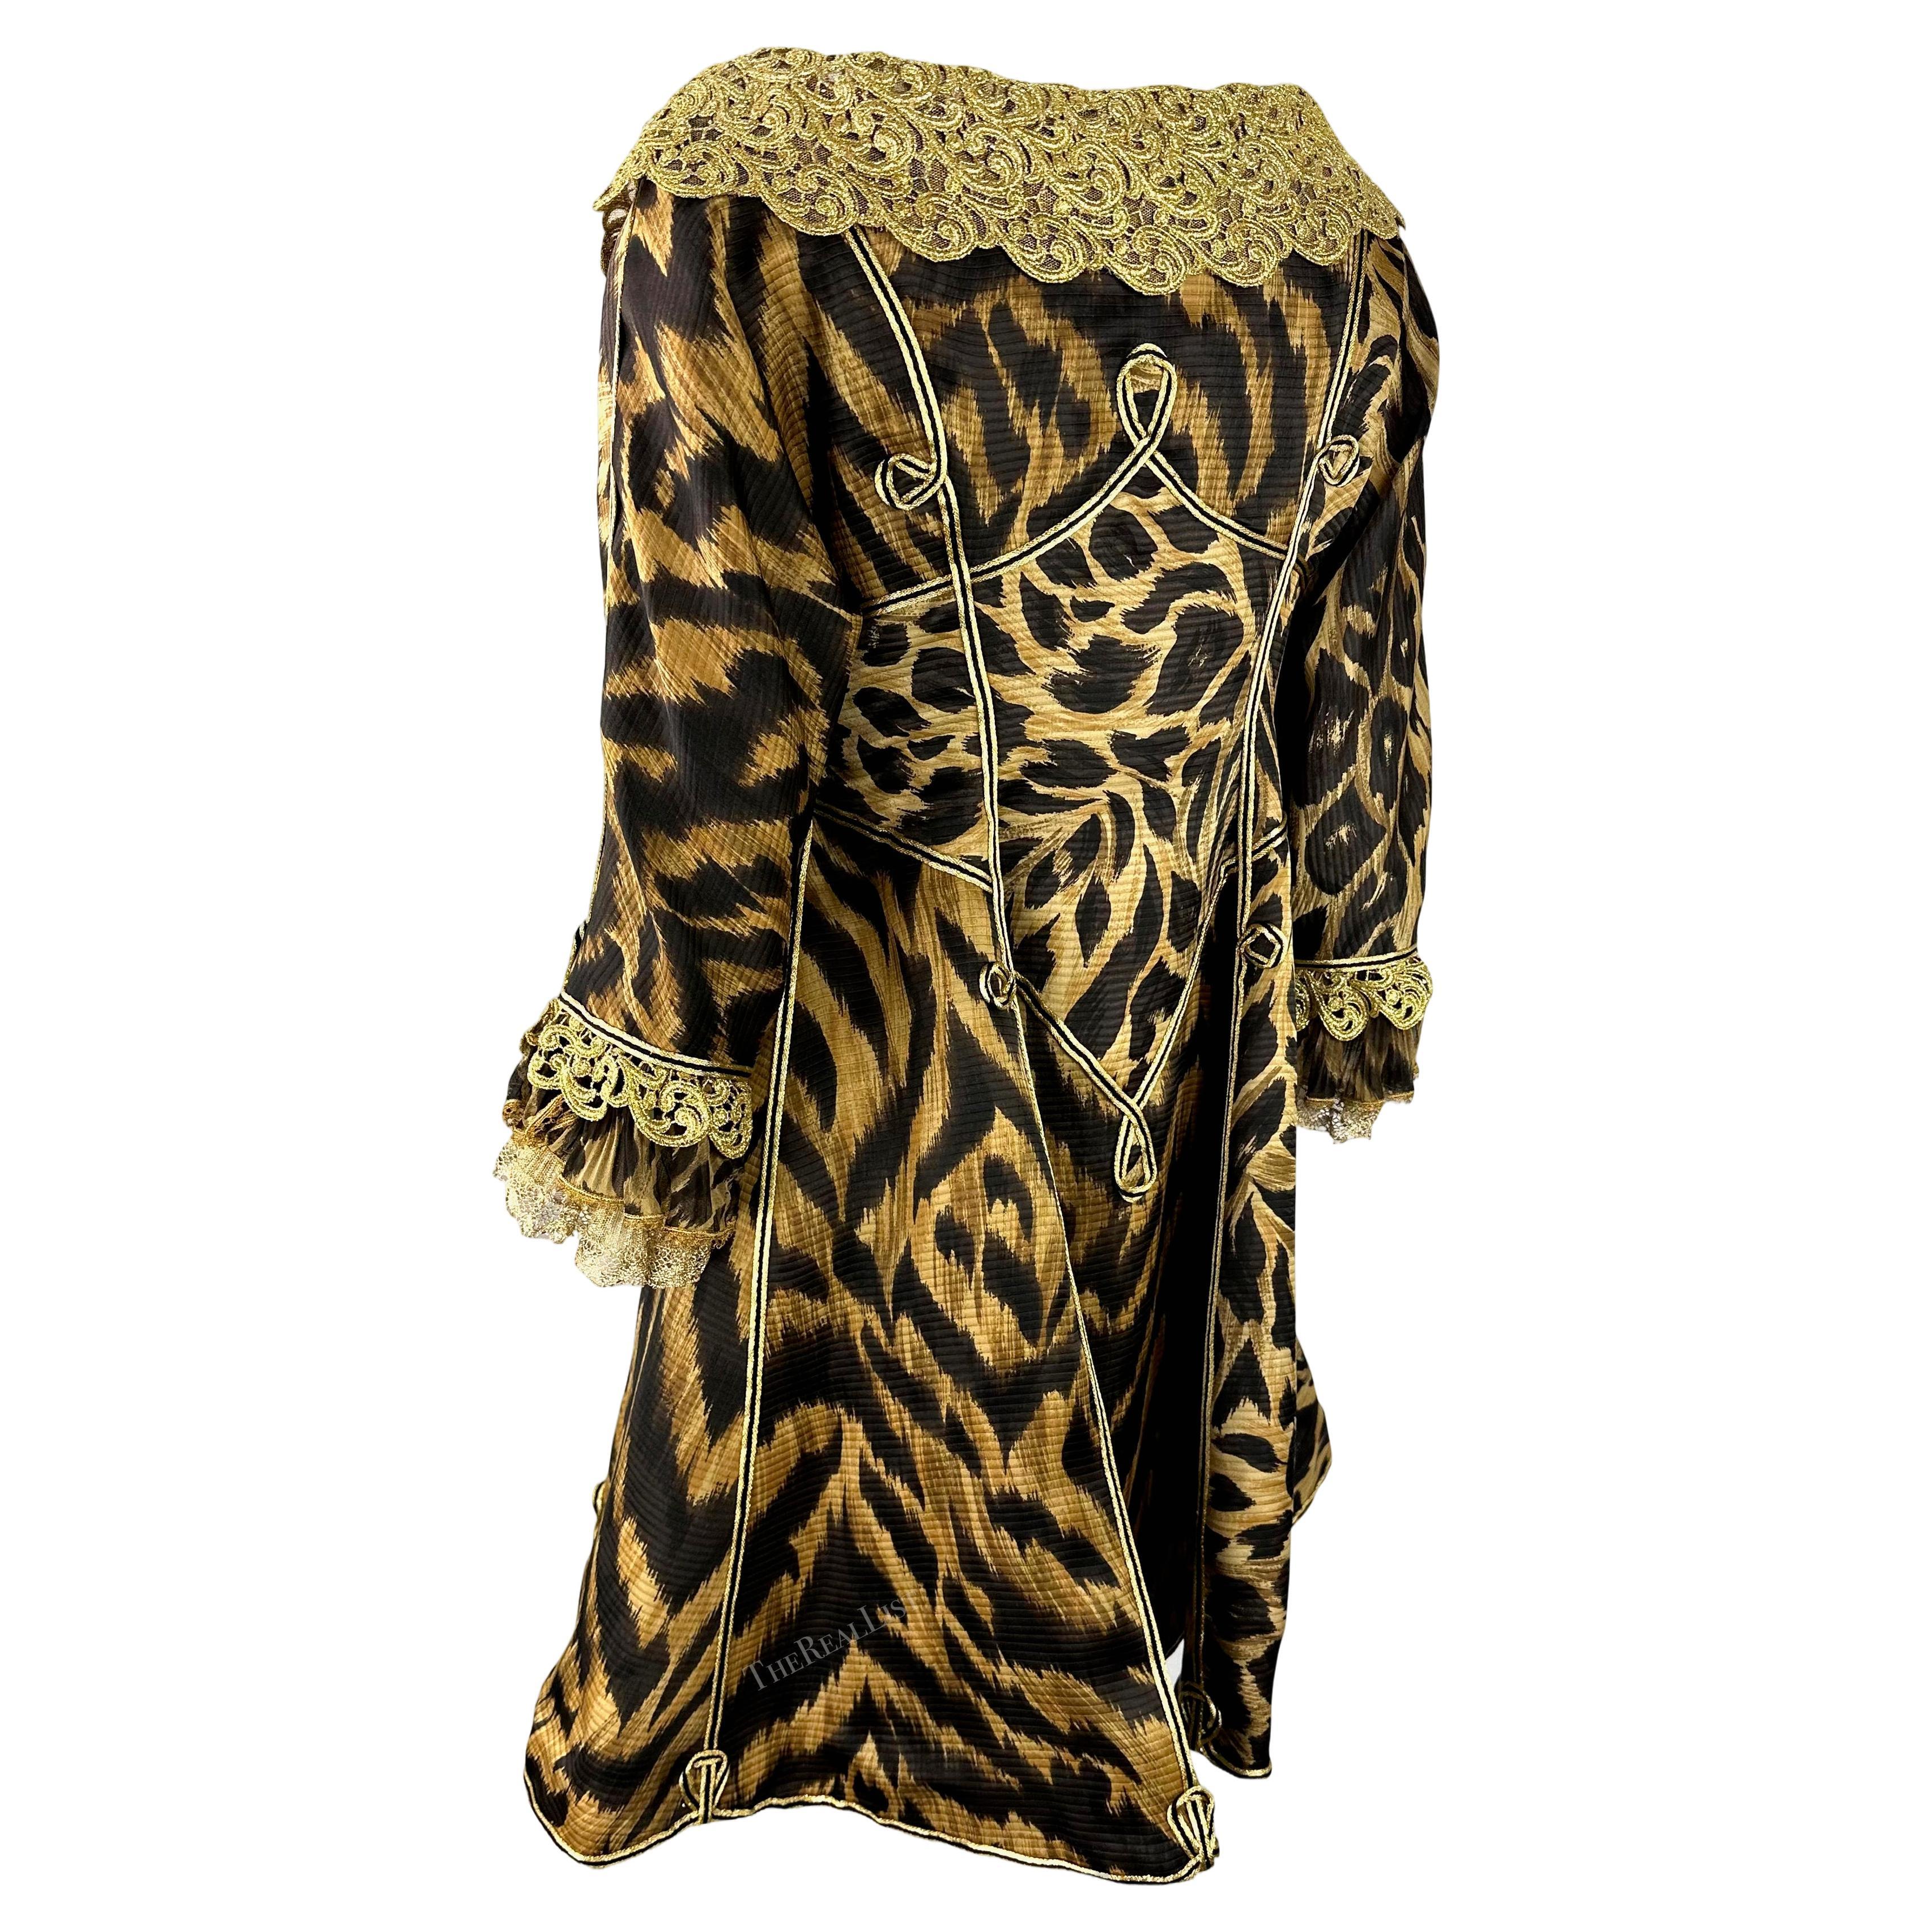 S/S 1992 Atelier Versace Haute Couture Runway Leopard Silk Gold Lace Coat Dress For Sale 5